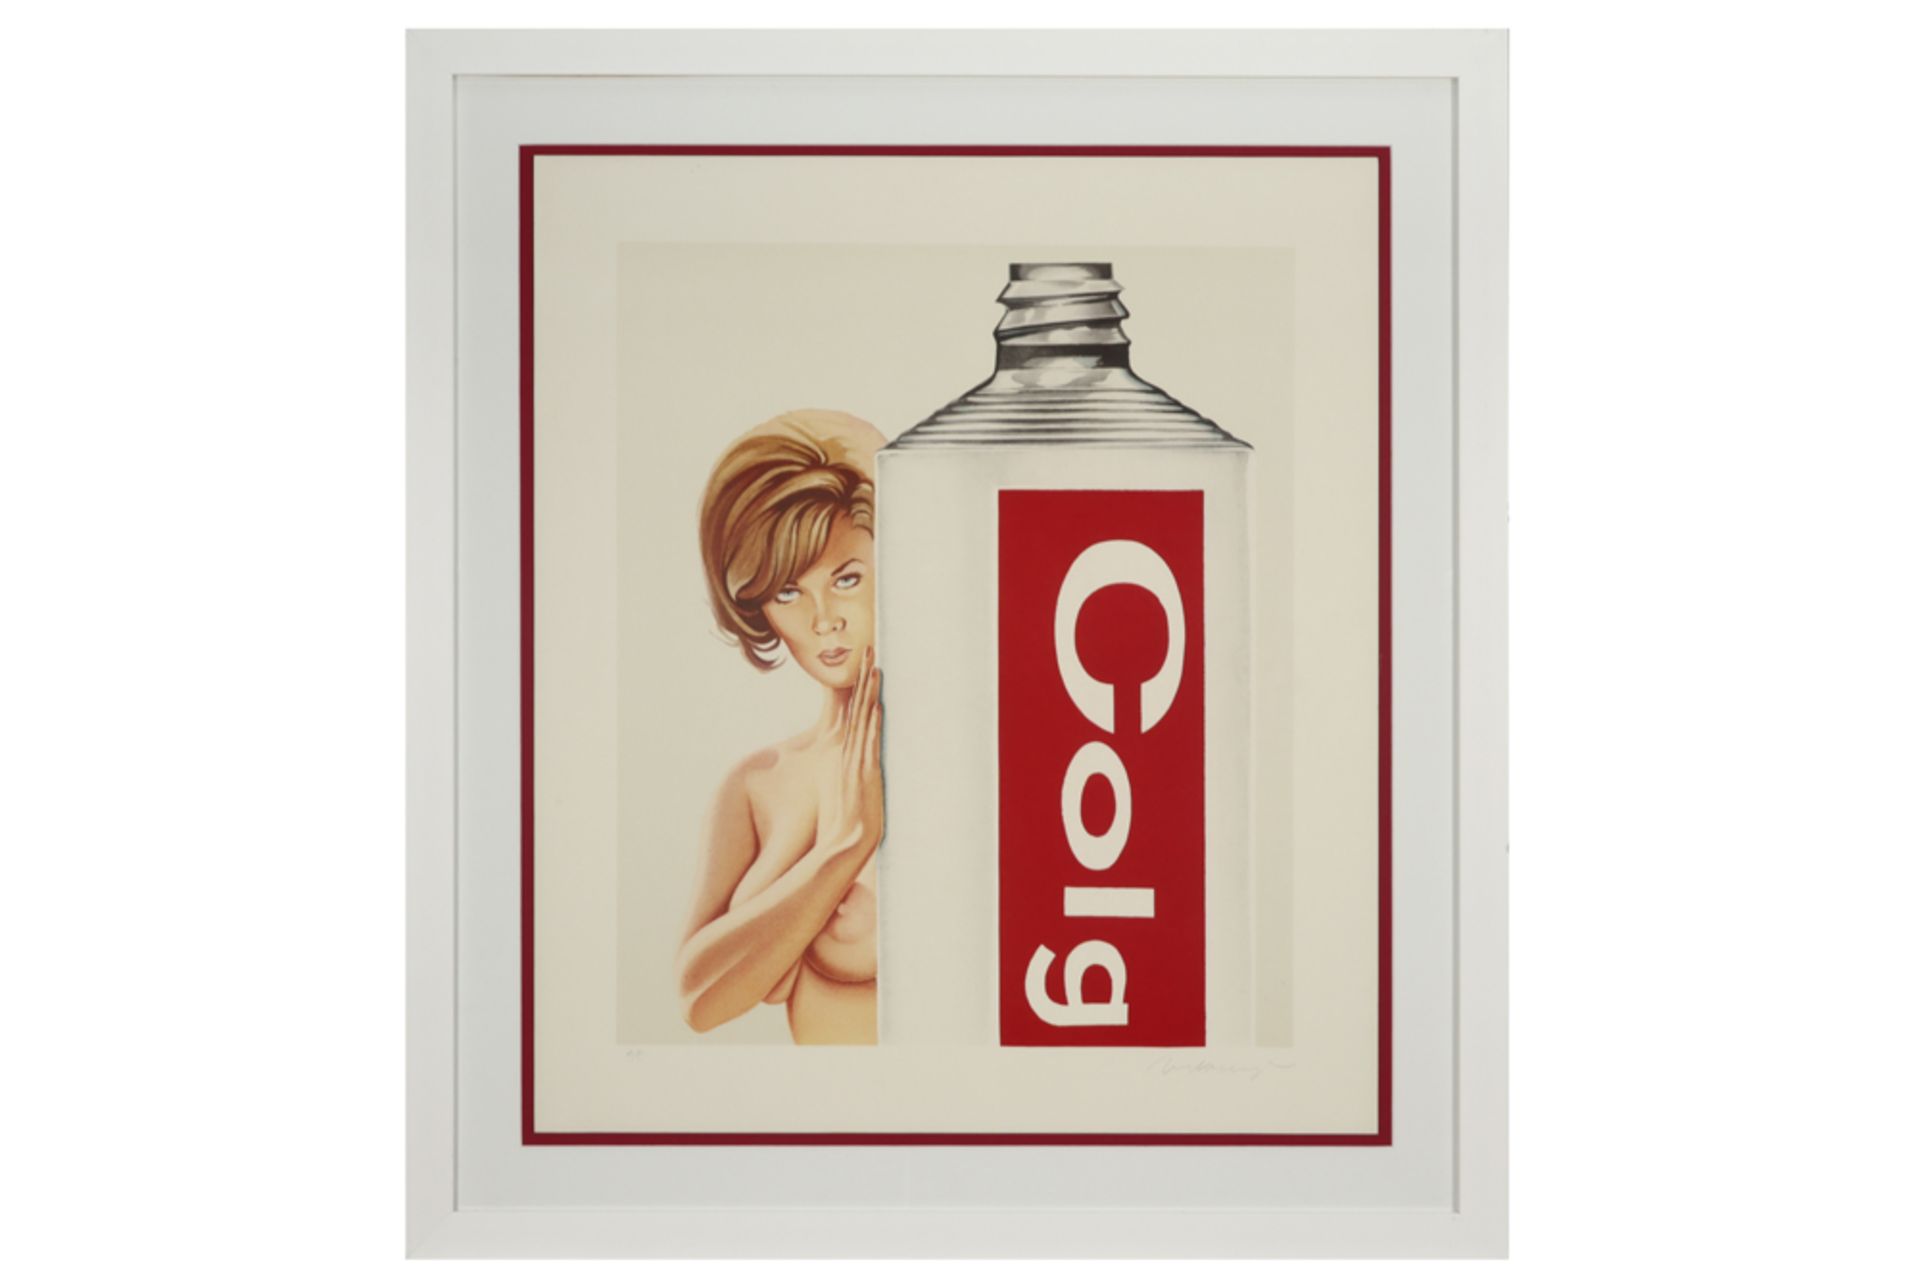 Mel Ramos signed typical Pop Art "Colgate" "AP" print in colors || MEL RAMOS (1935 - 2018) print - Image 3 of 3